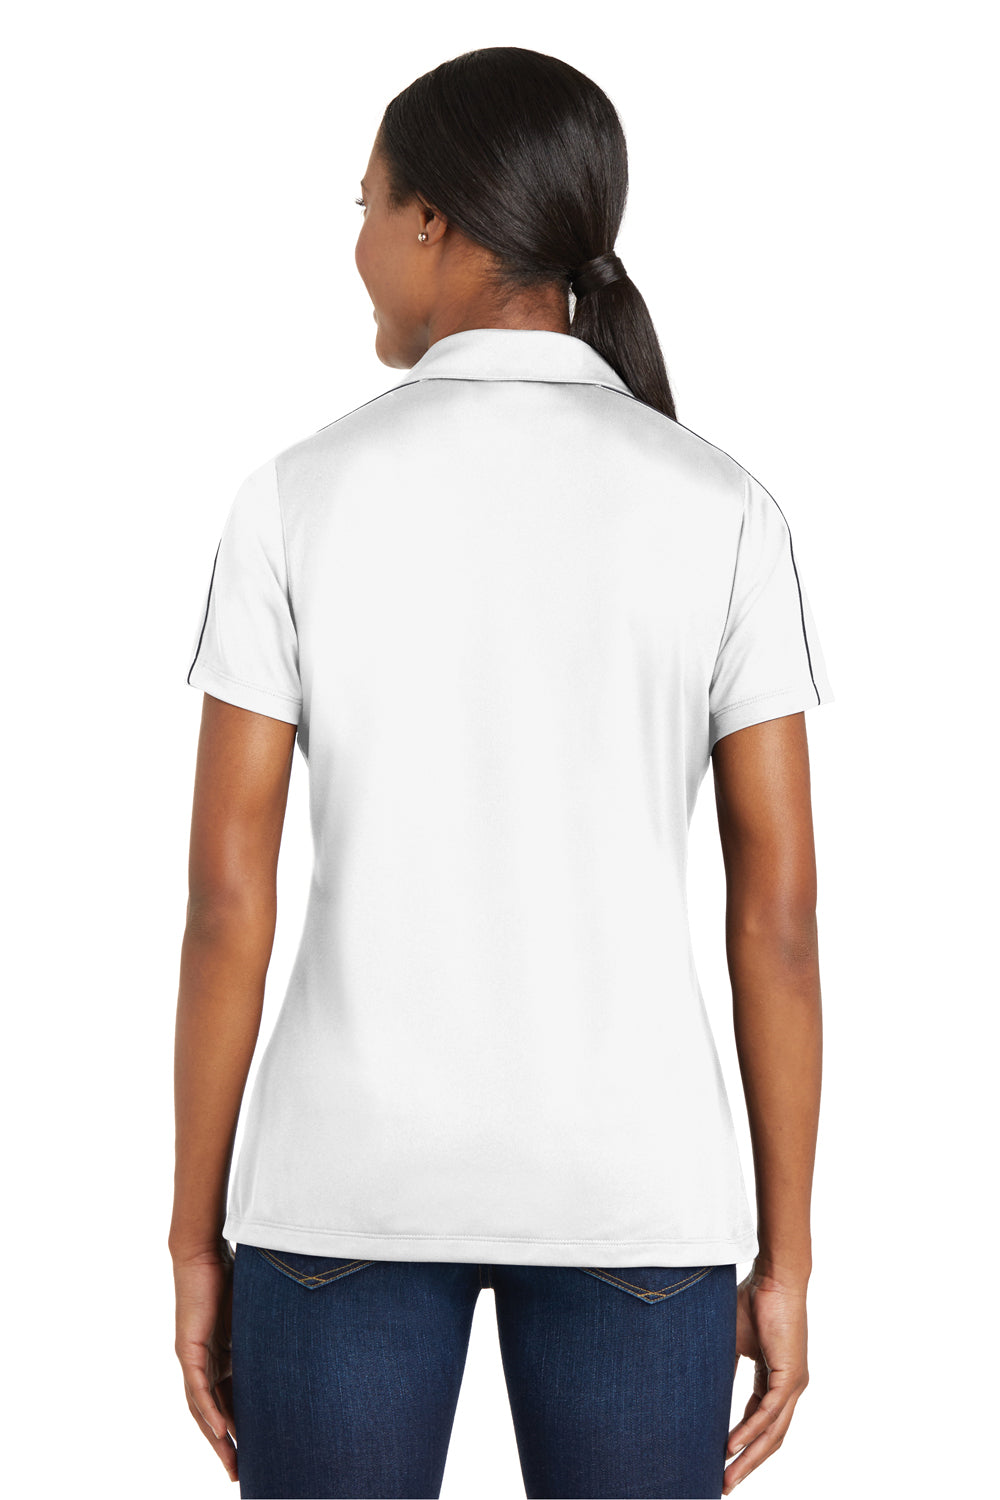 Sport-Tek LST653 Womens Sport-Wick Moisture Wicking Short Sleeve Polo Shirt White/Grey Back